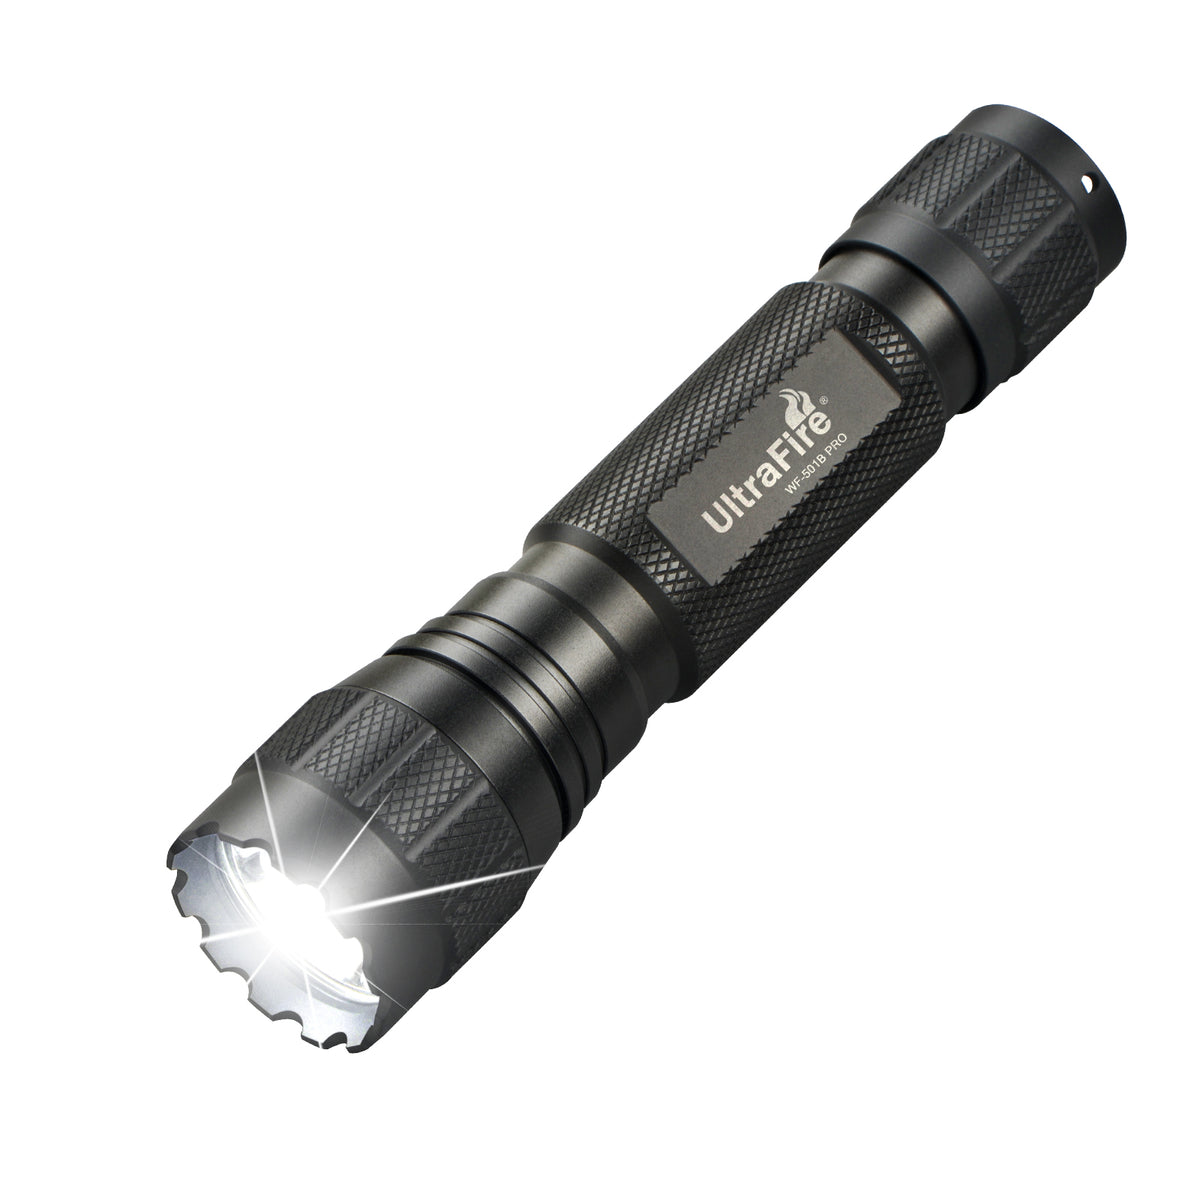 ULTRAFIRE Flashlight High Lumens with Holster, 1200 Lumen Single Mode Law Enforcement LED Flashlights with belt Holder, Small Duty Flash Light WF-501B PRO